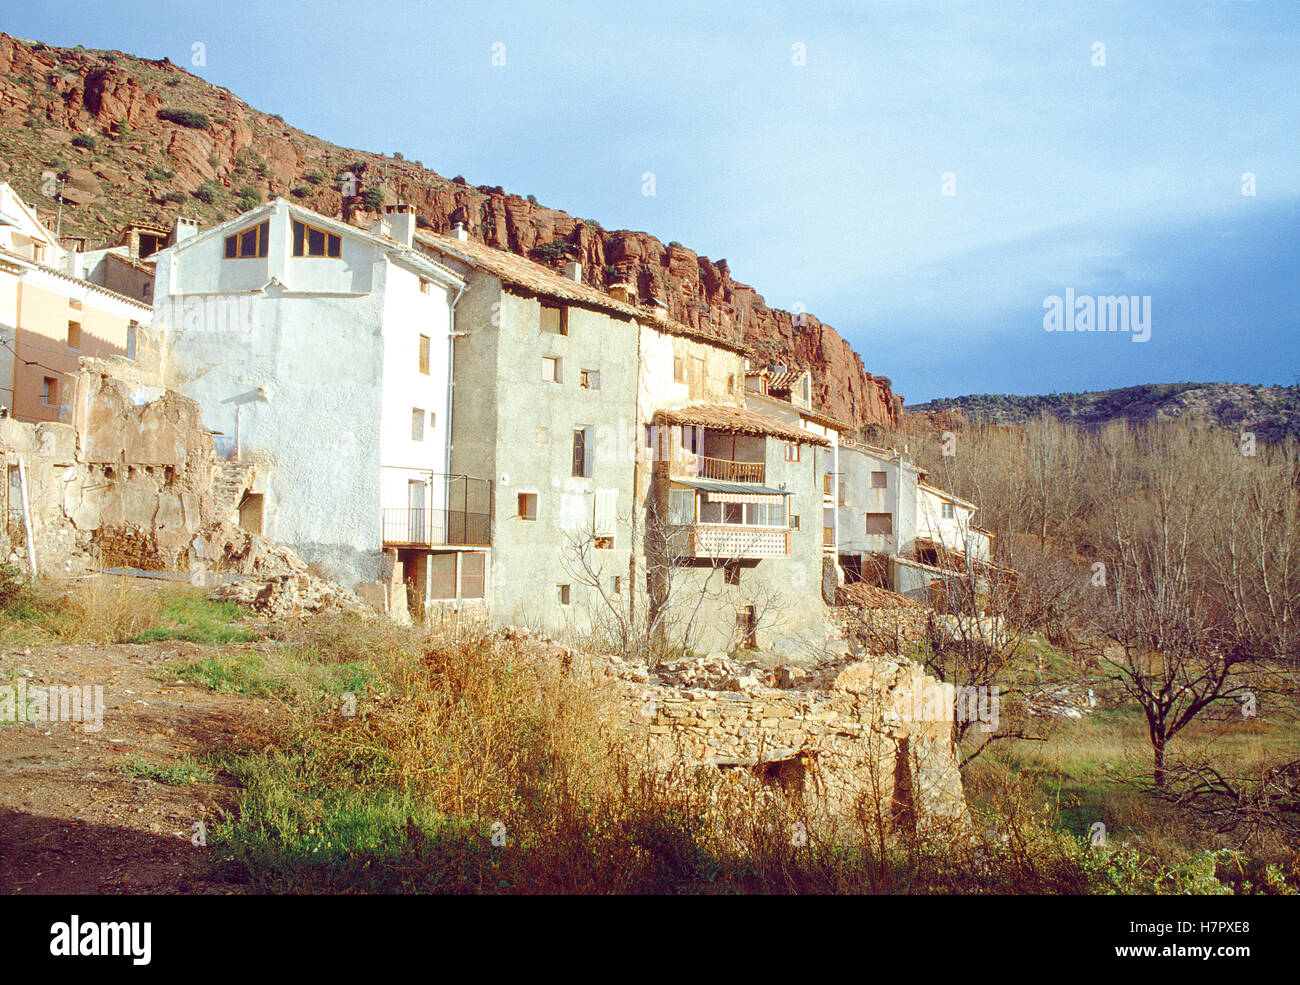 Peñarroya district. Montalban, Teruel province, Aragon, Spain. Stock Photo